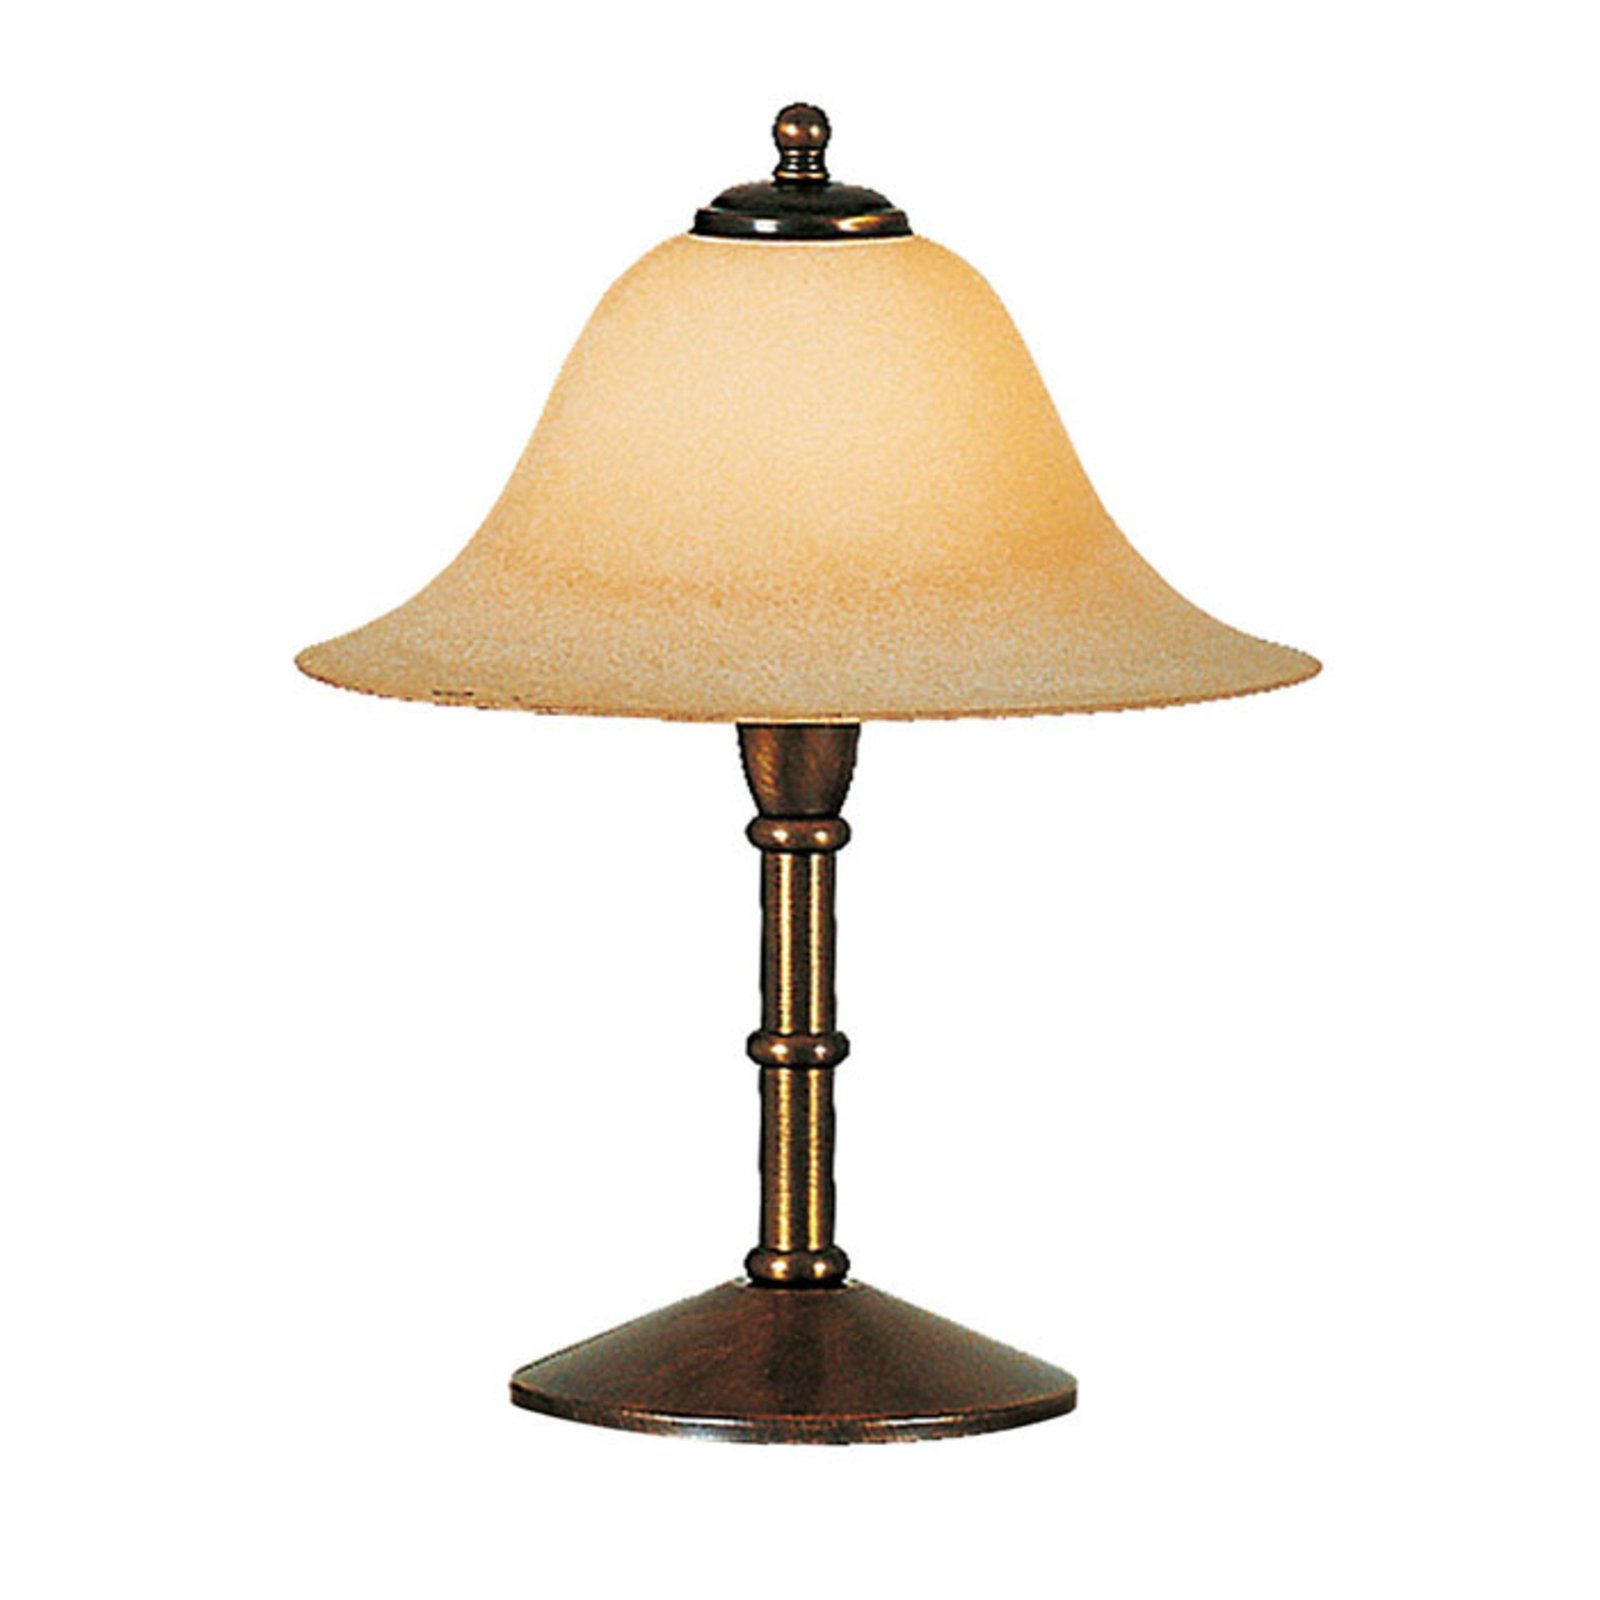 Menzel Anno 1900 bordlampe, Scavo-røgglasskærm